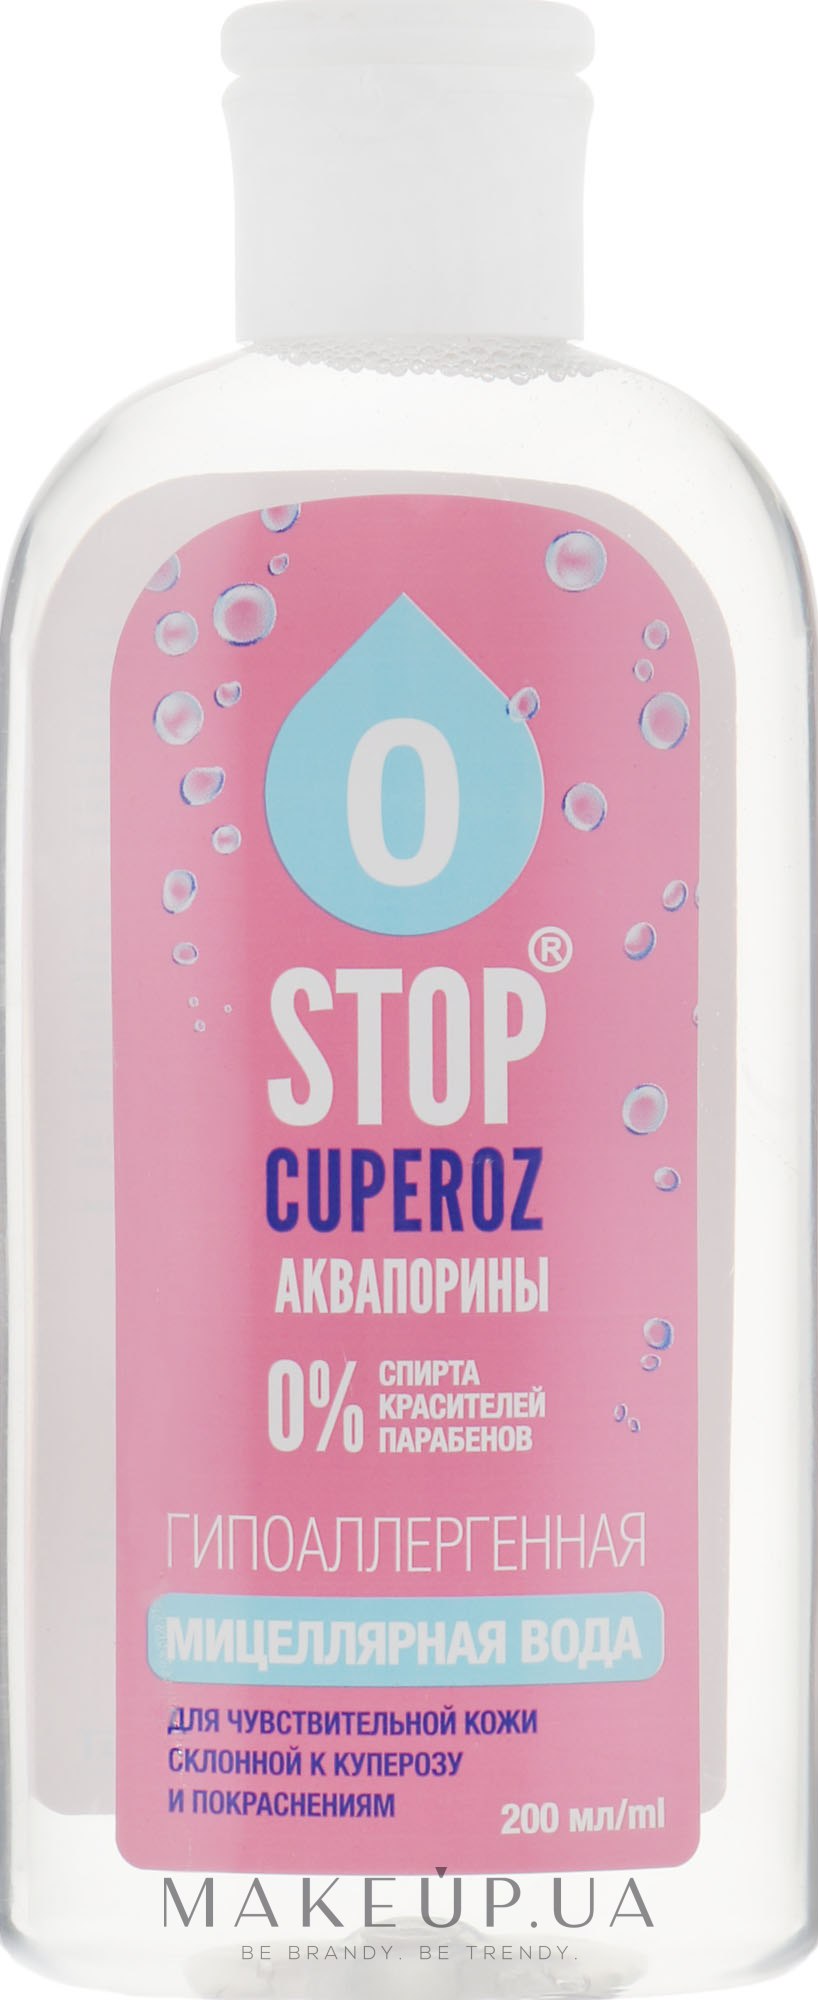 Міцелярна вода "Аквапорини" - ФитоБиоТехнологии Stop Cuperoz — фото 200ml